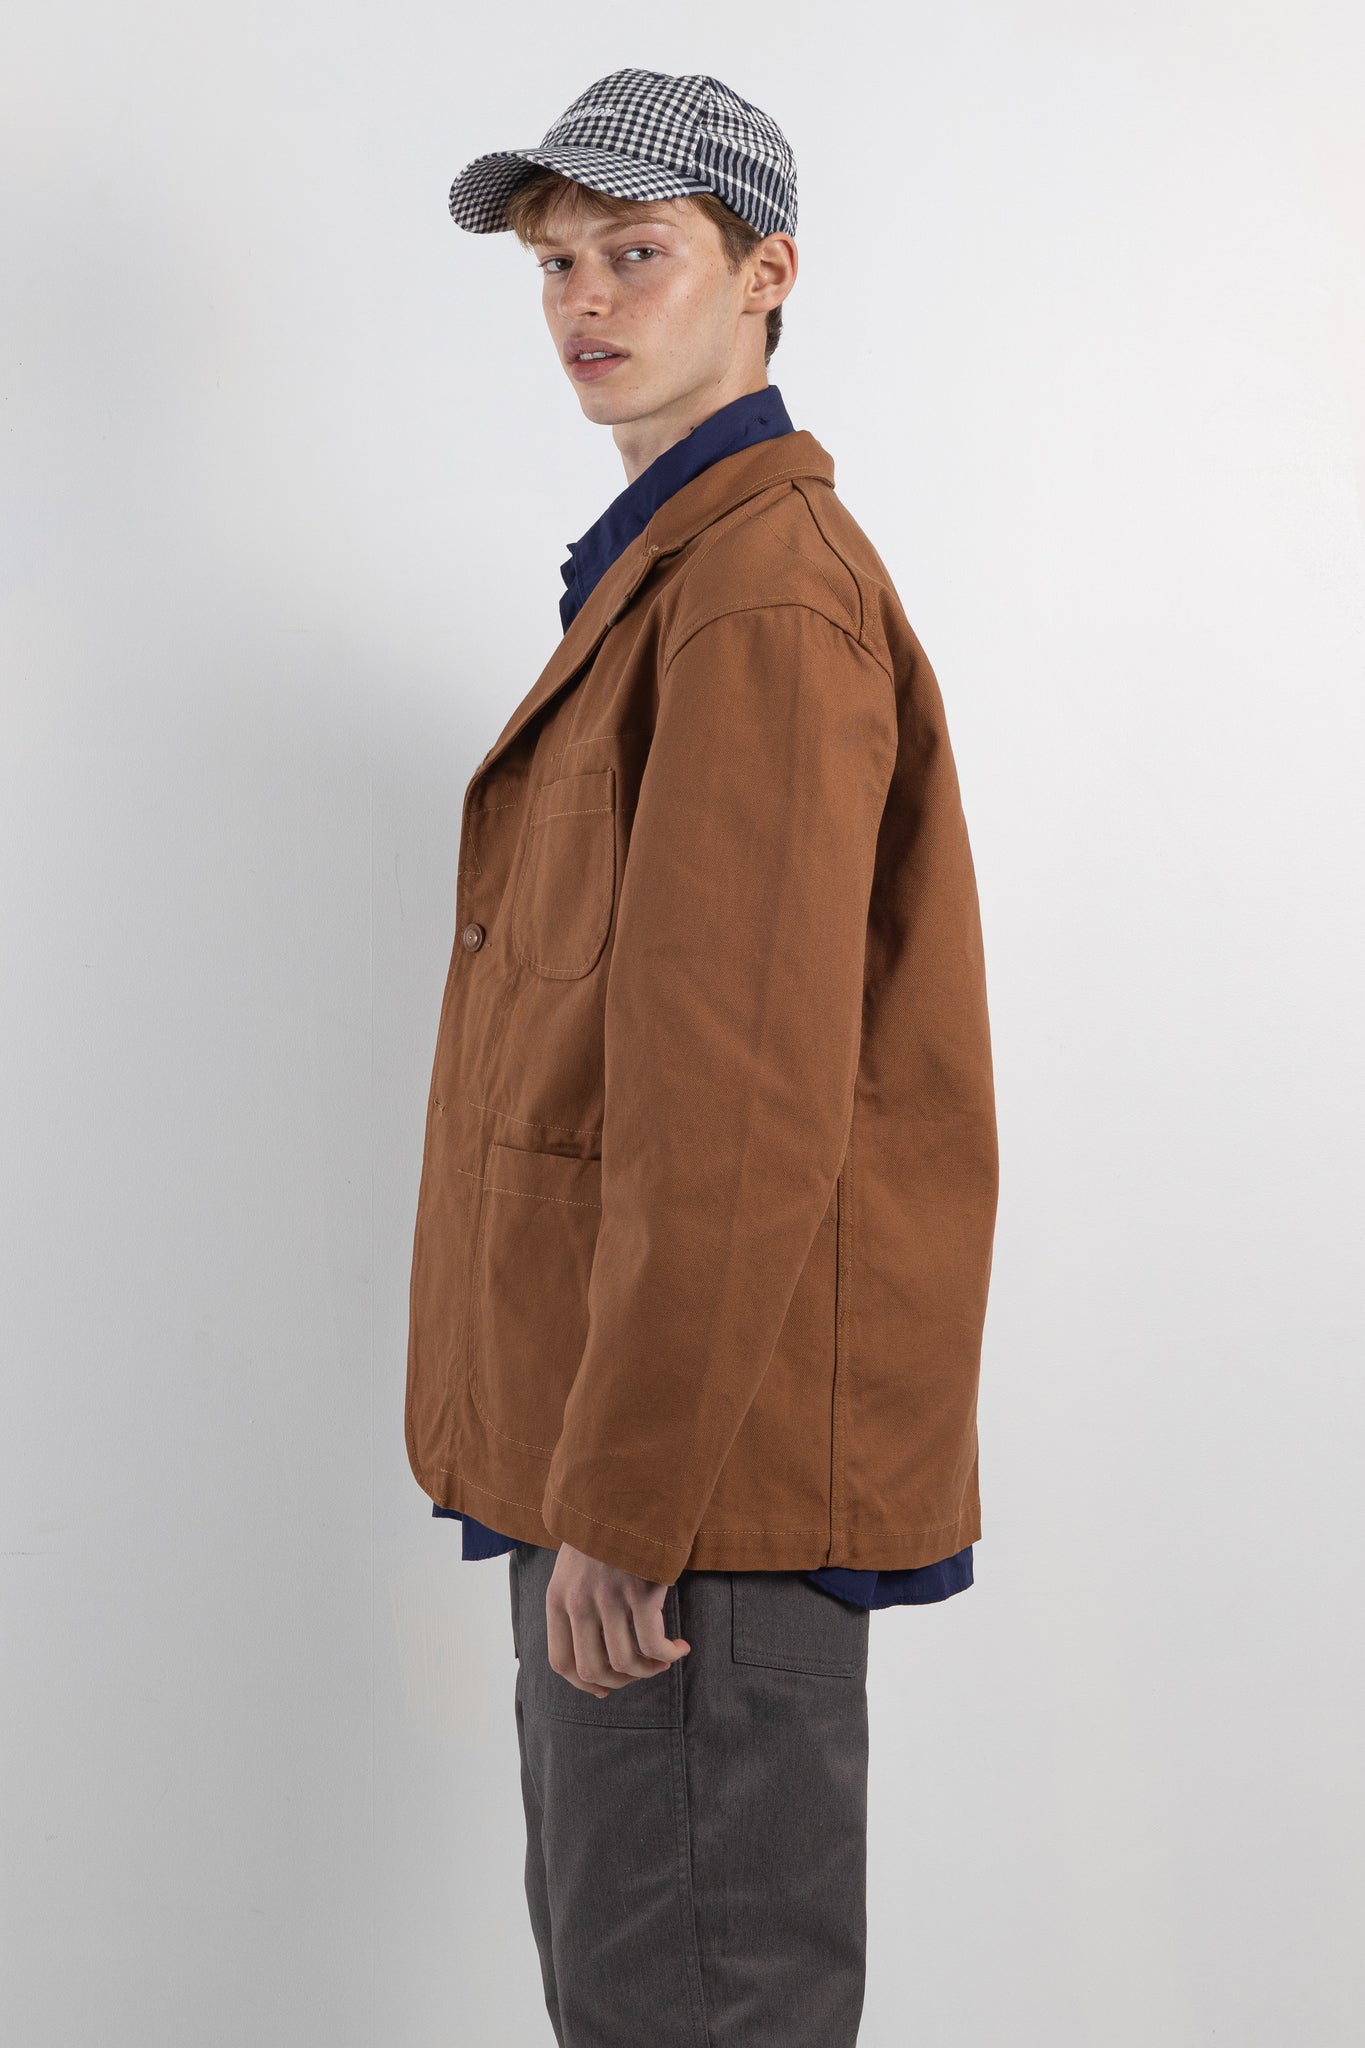 Mens jacket | Engineered Garments Bedford Jacket | The Standard Store